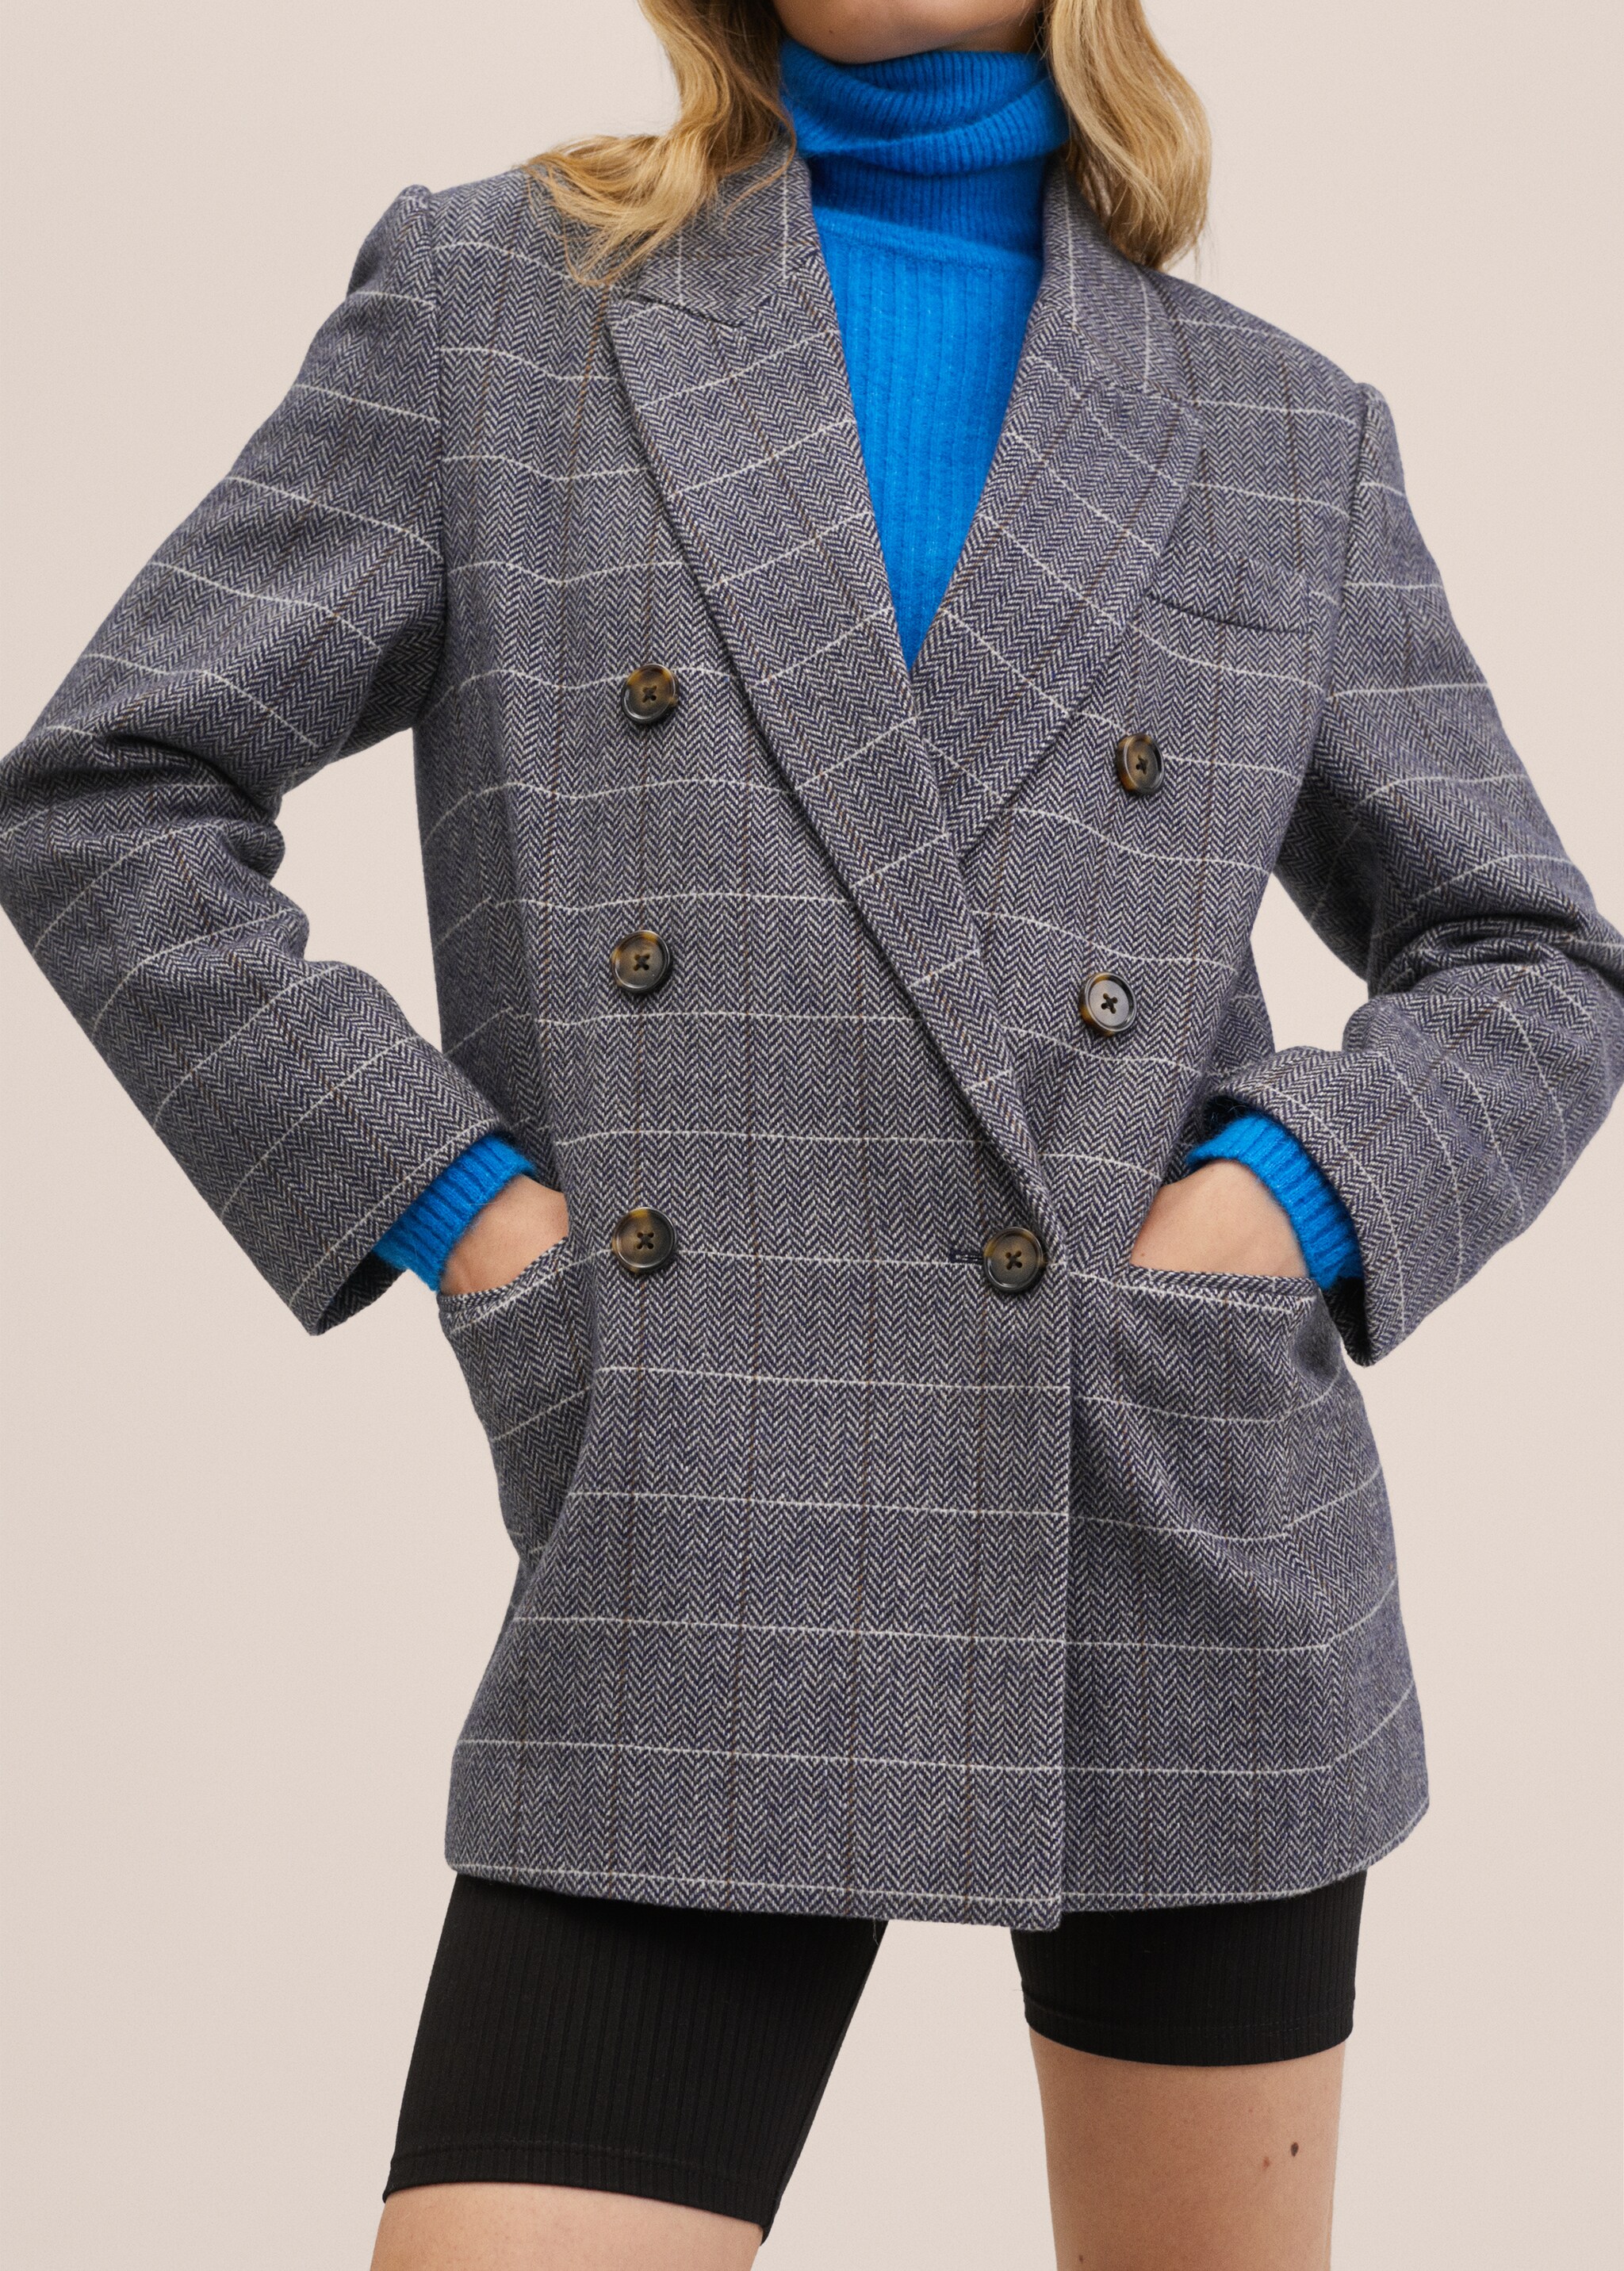 Oversized woollen suit jacket - Details of the article 2